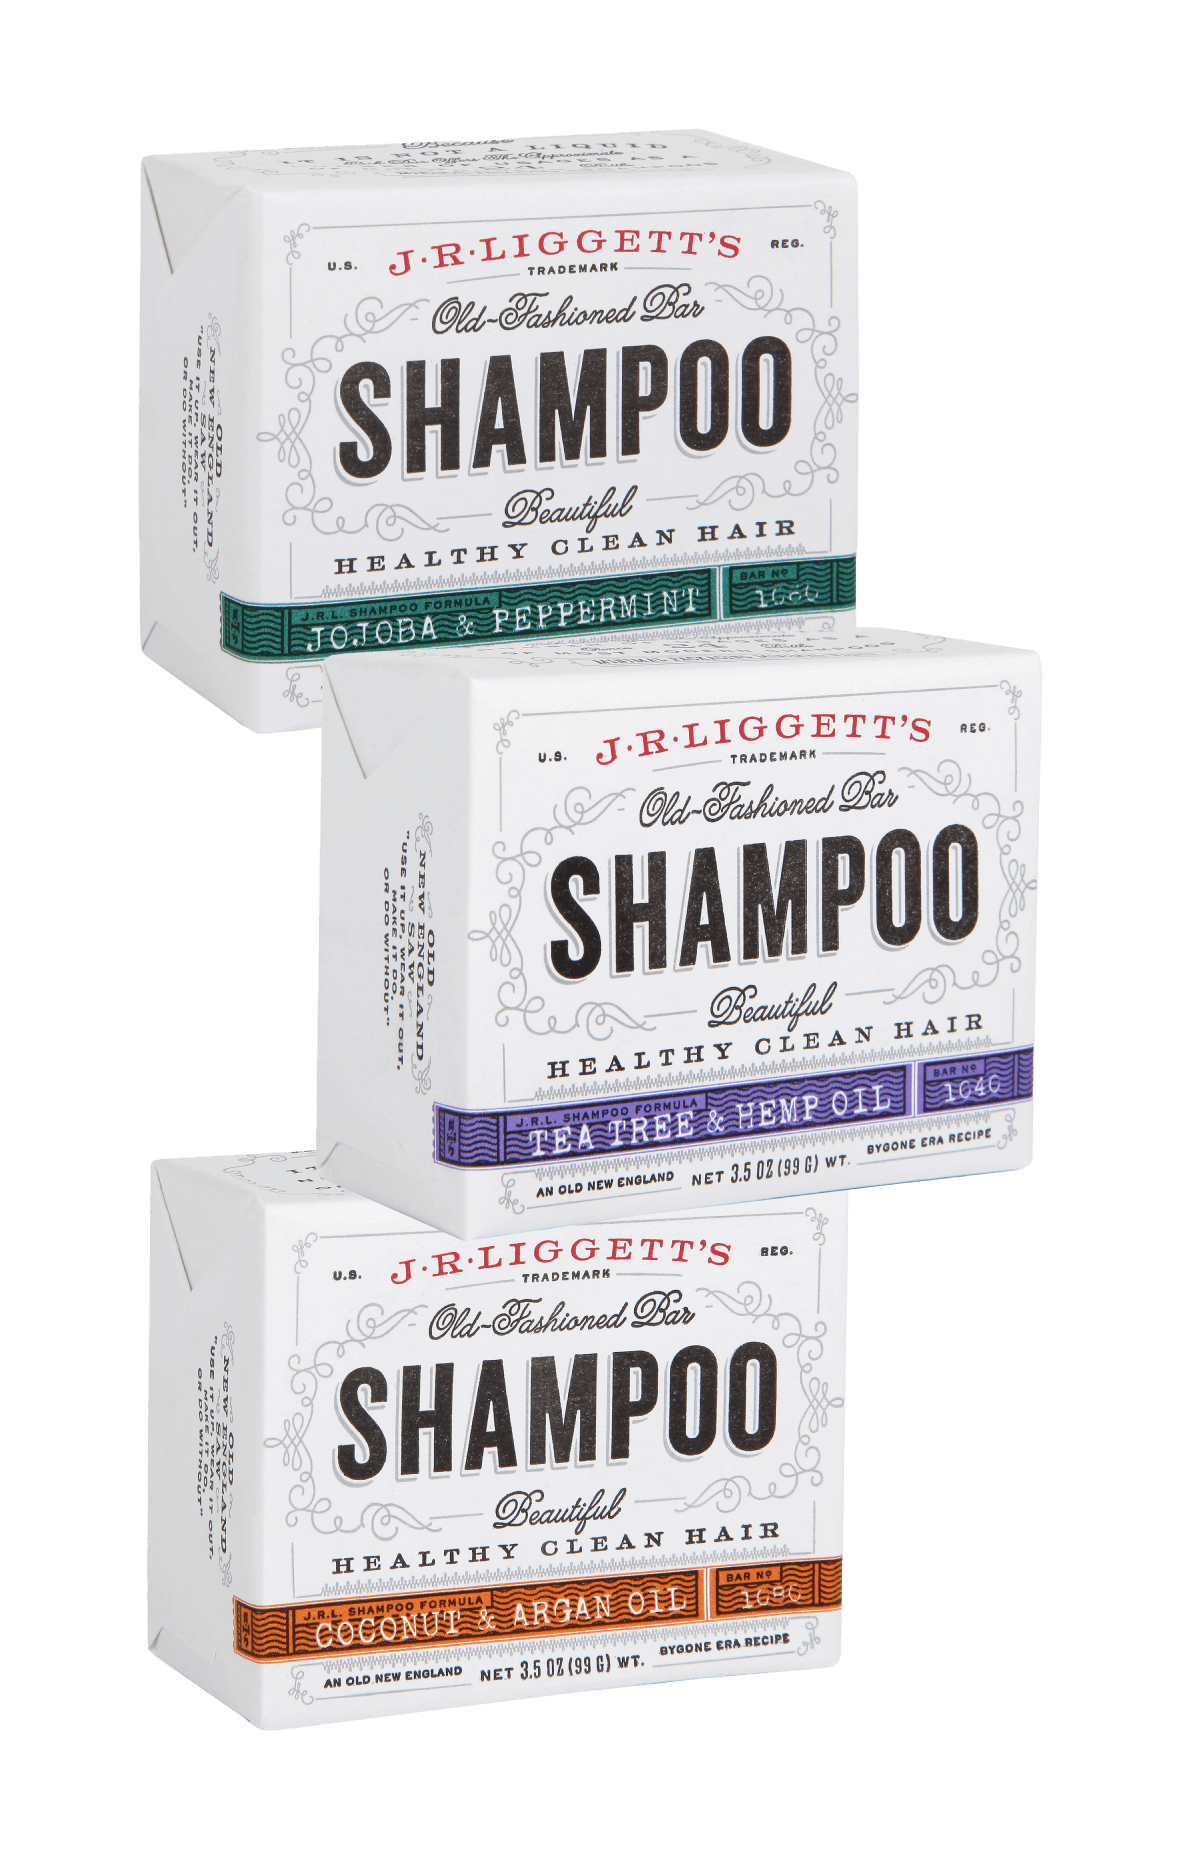 Stack of bar shampoo by J.R. Liggett's